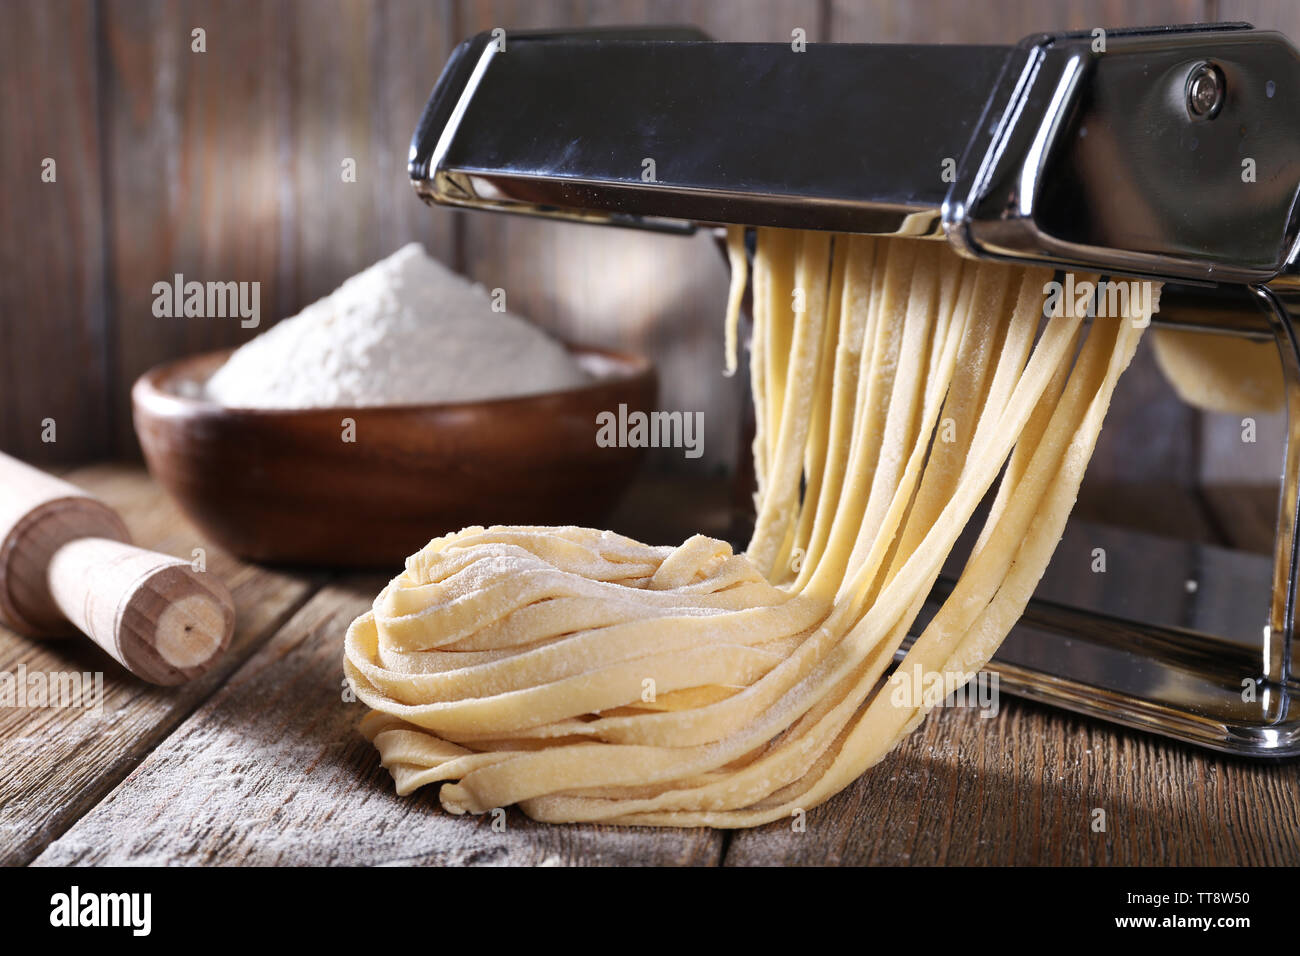 https://c8.alamy.com/comp/TT8W50/making-noodles-with-pasta-machine-on-wooden-background-TT8W50.jpg